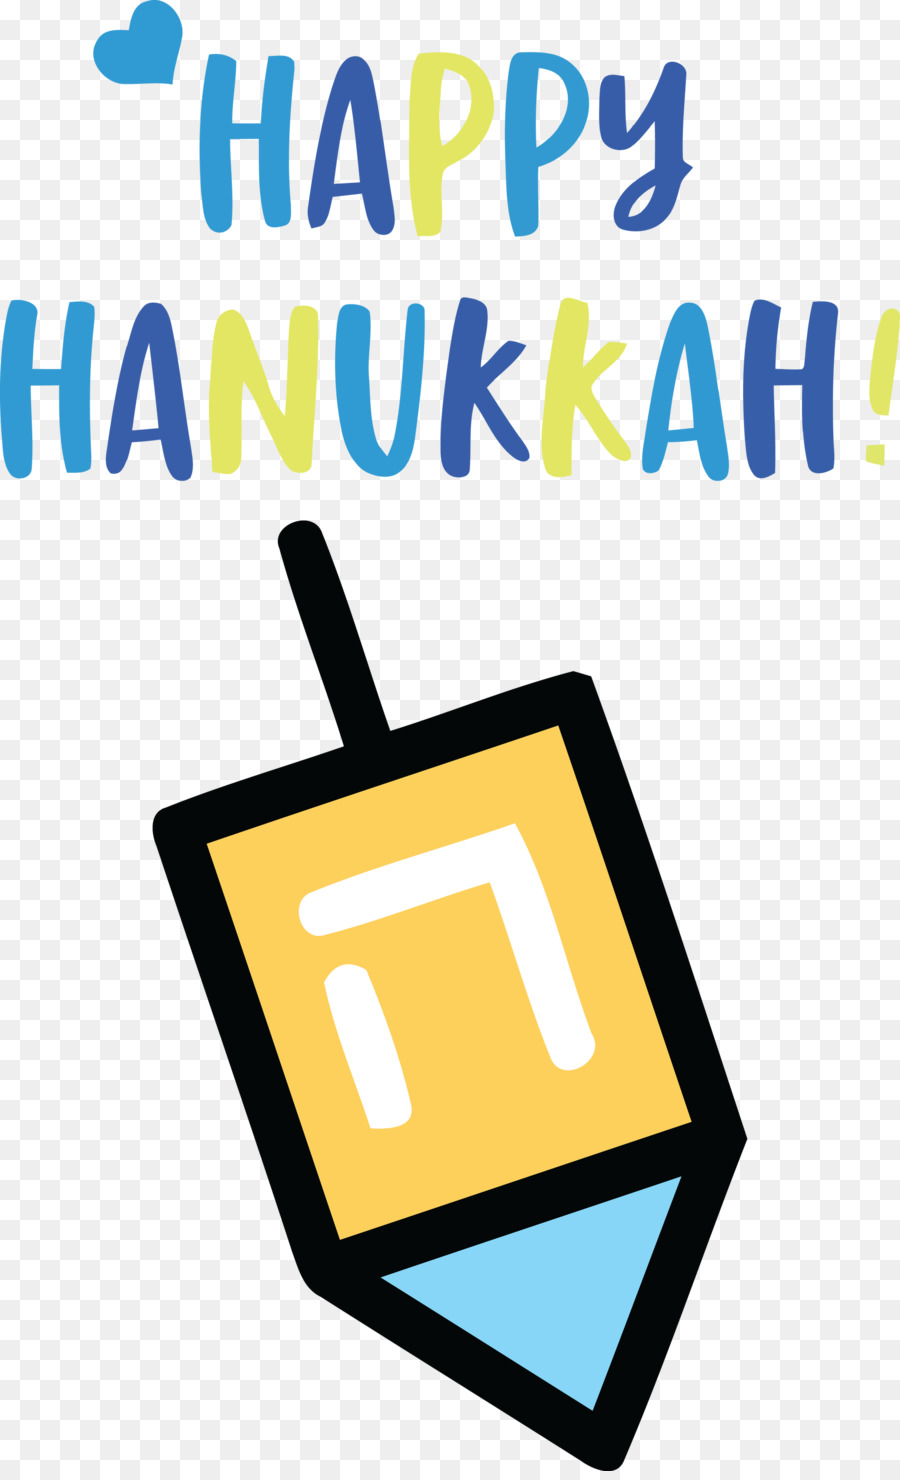 Buon Hanukkah Hanukkah festival ebraico - 